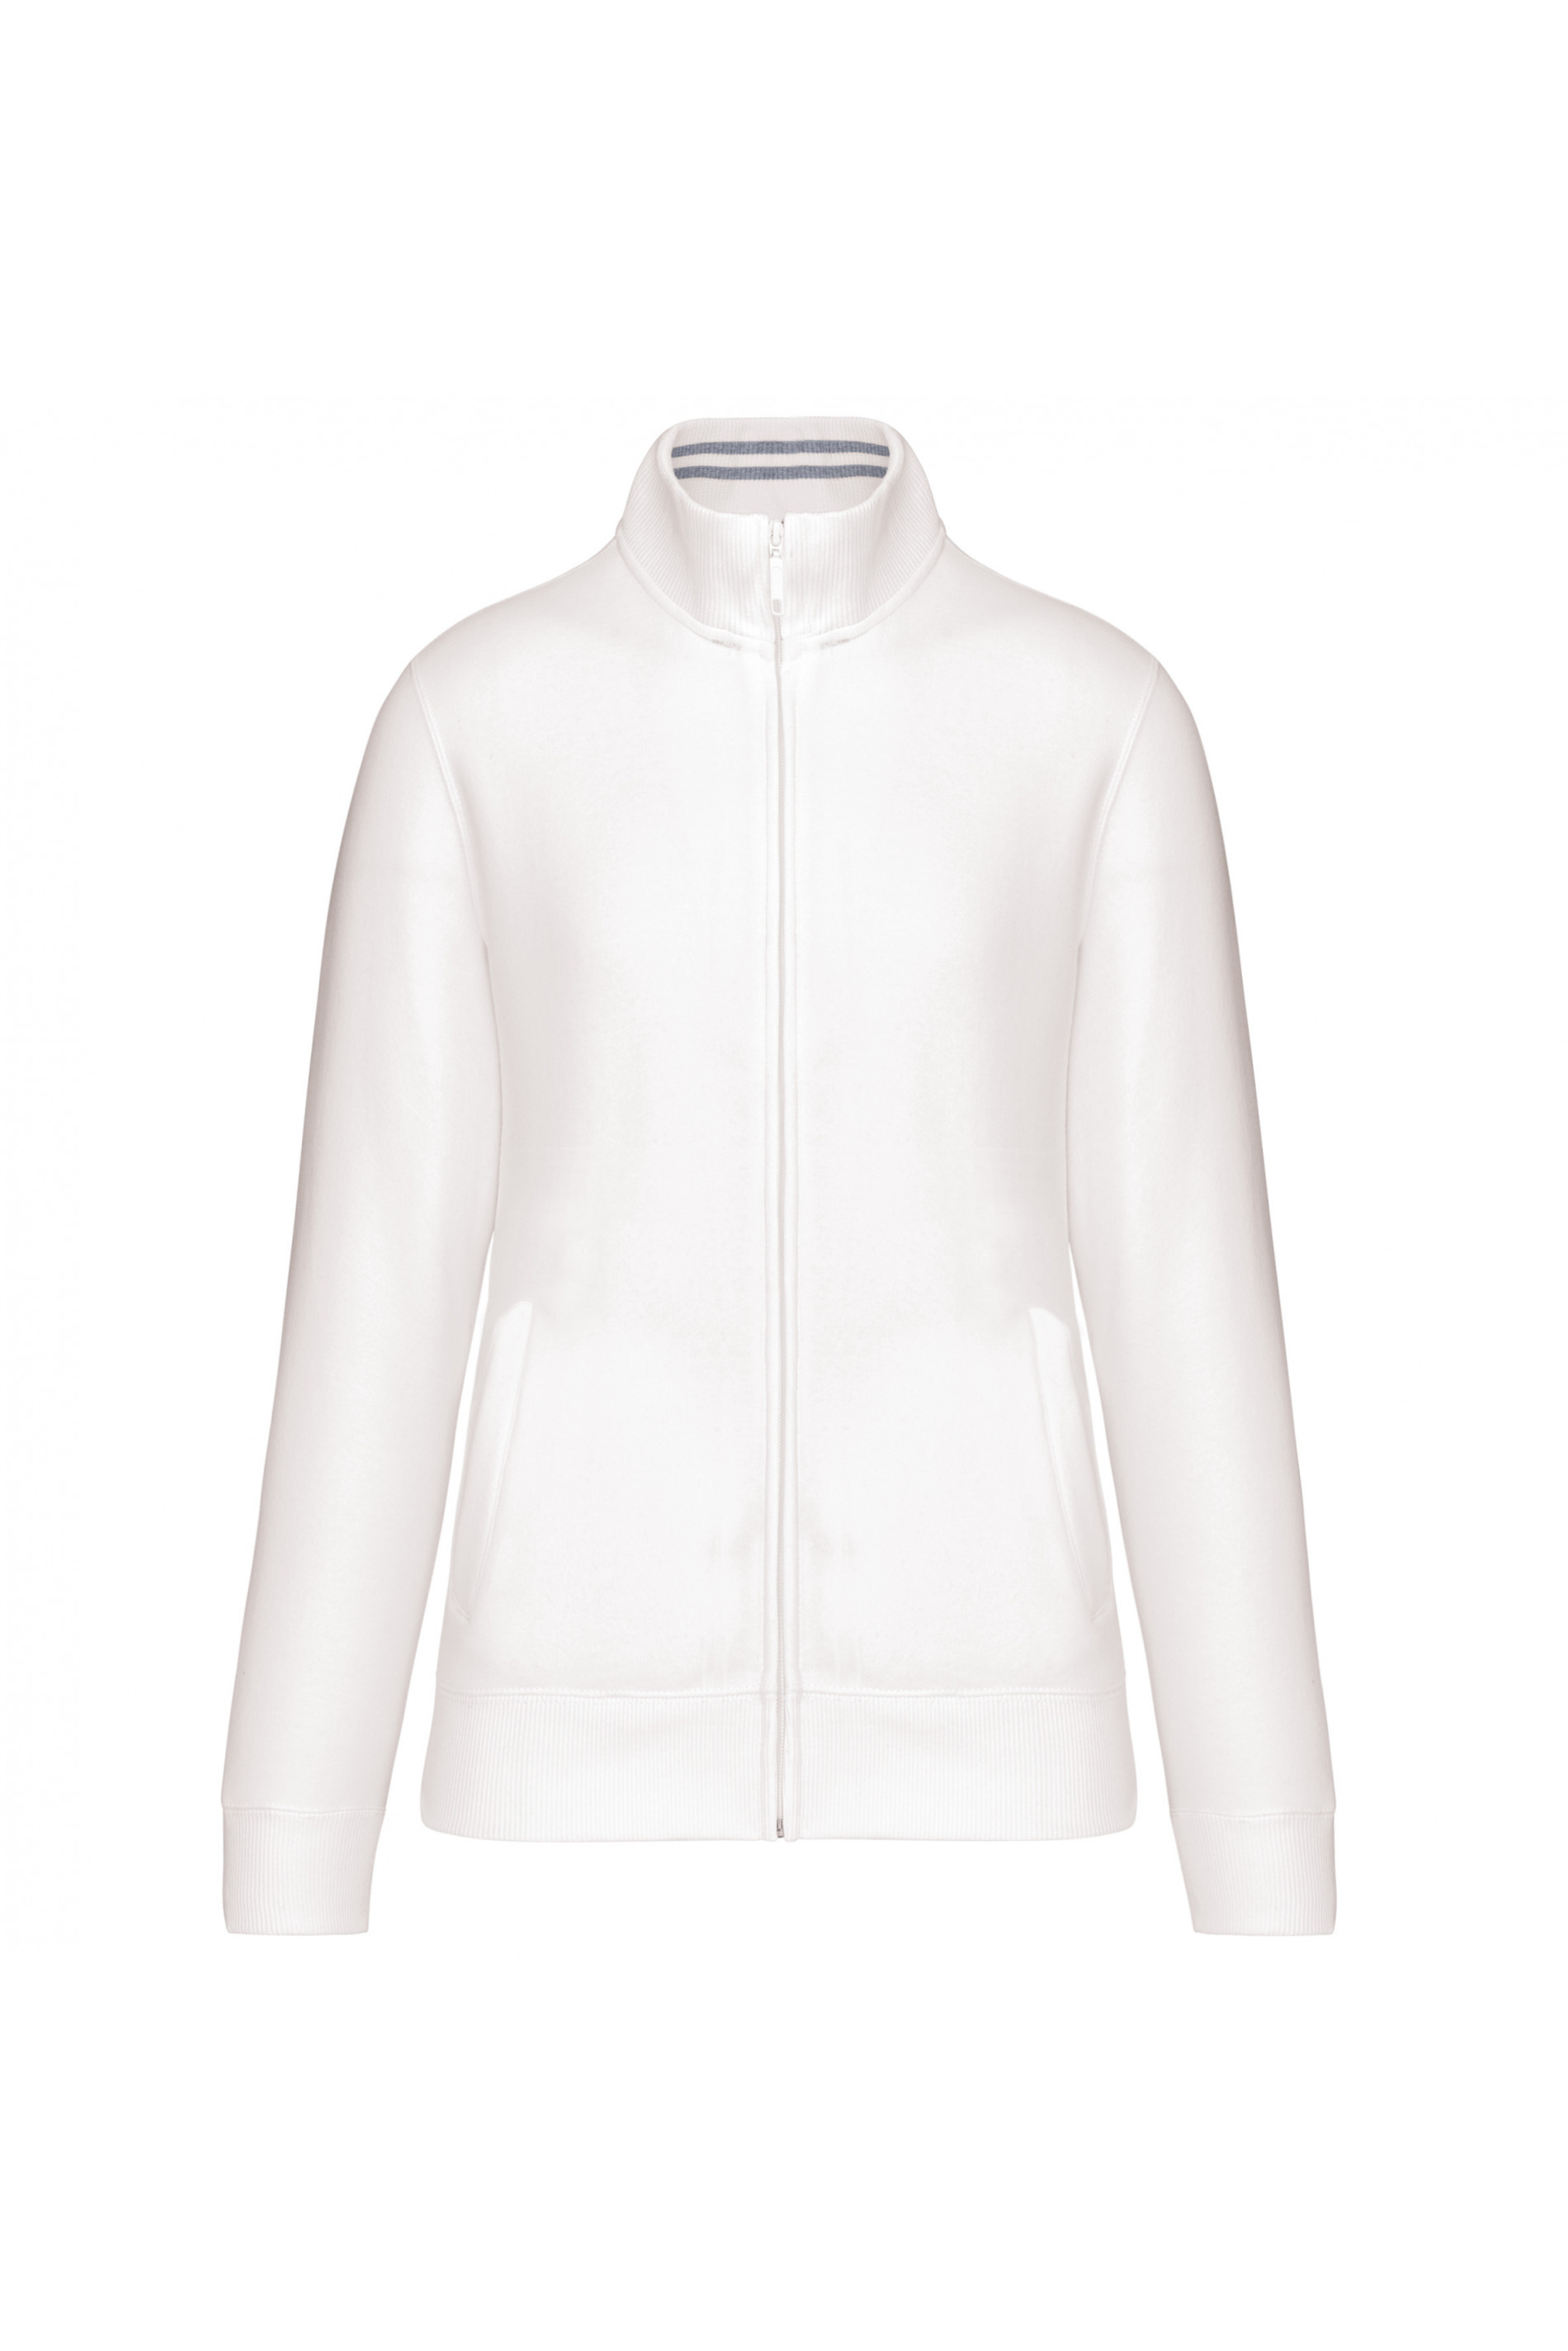 Ladies' full zip sweat jacket K457